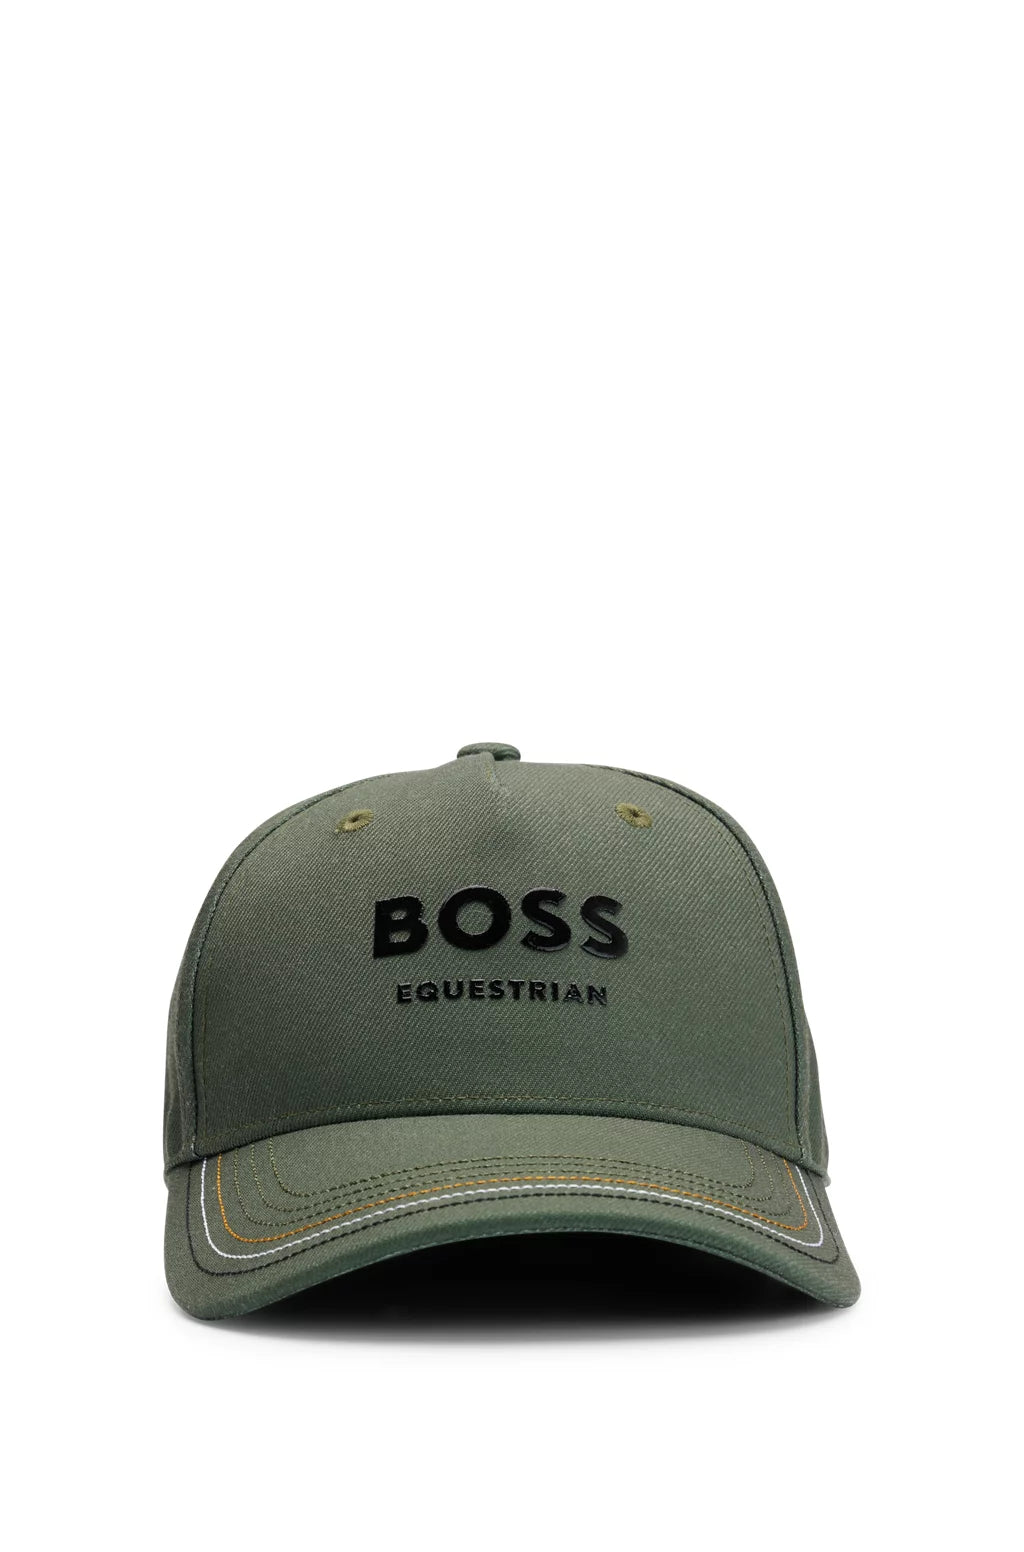 Boss Equestrian Classic Cap